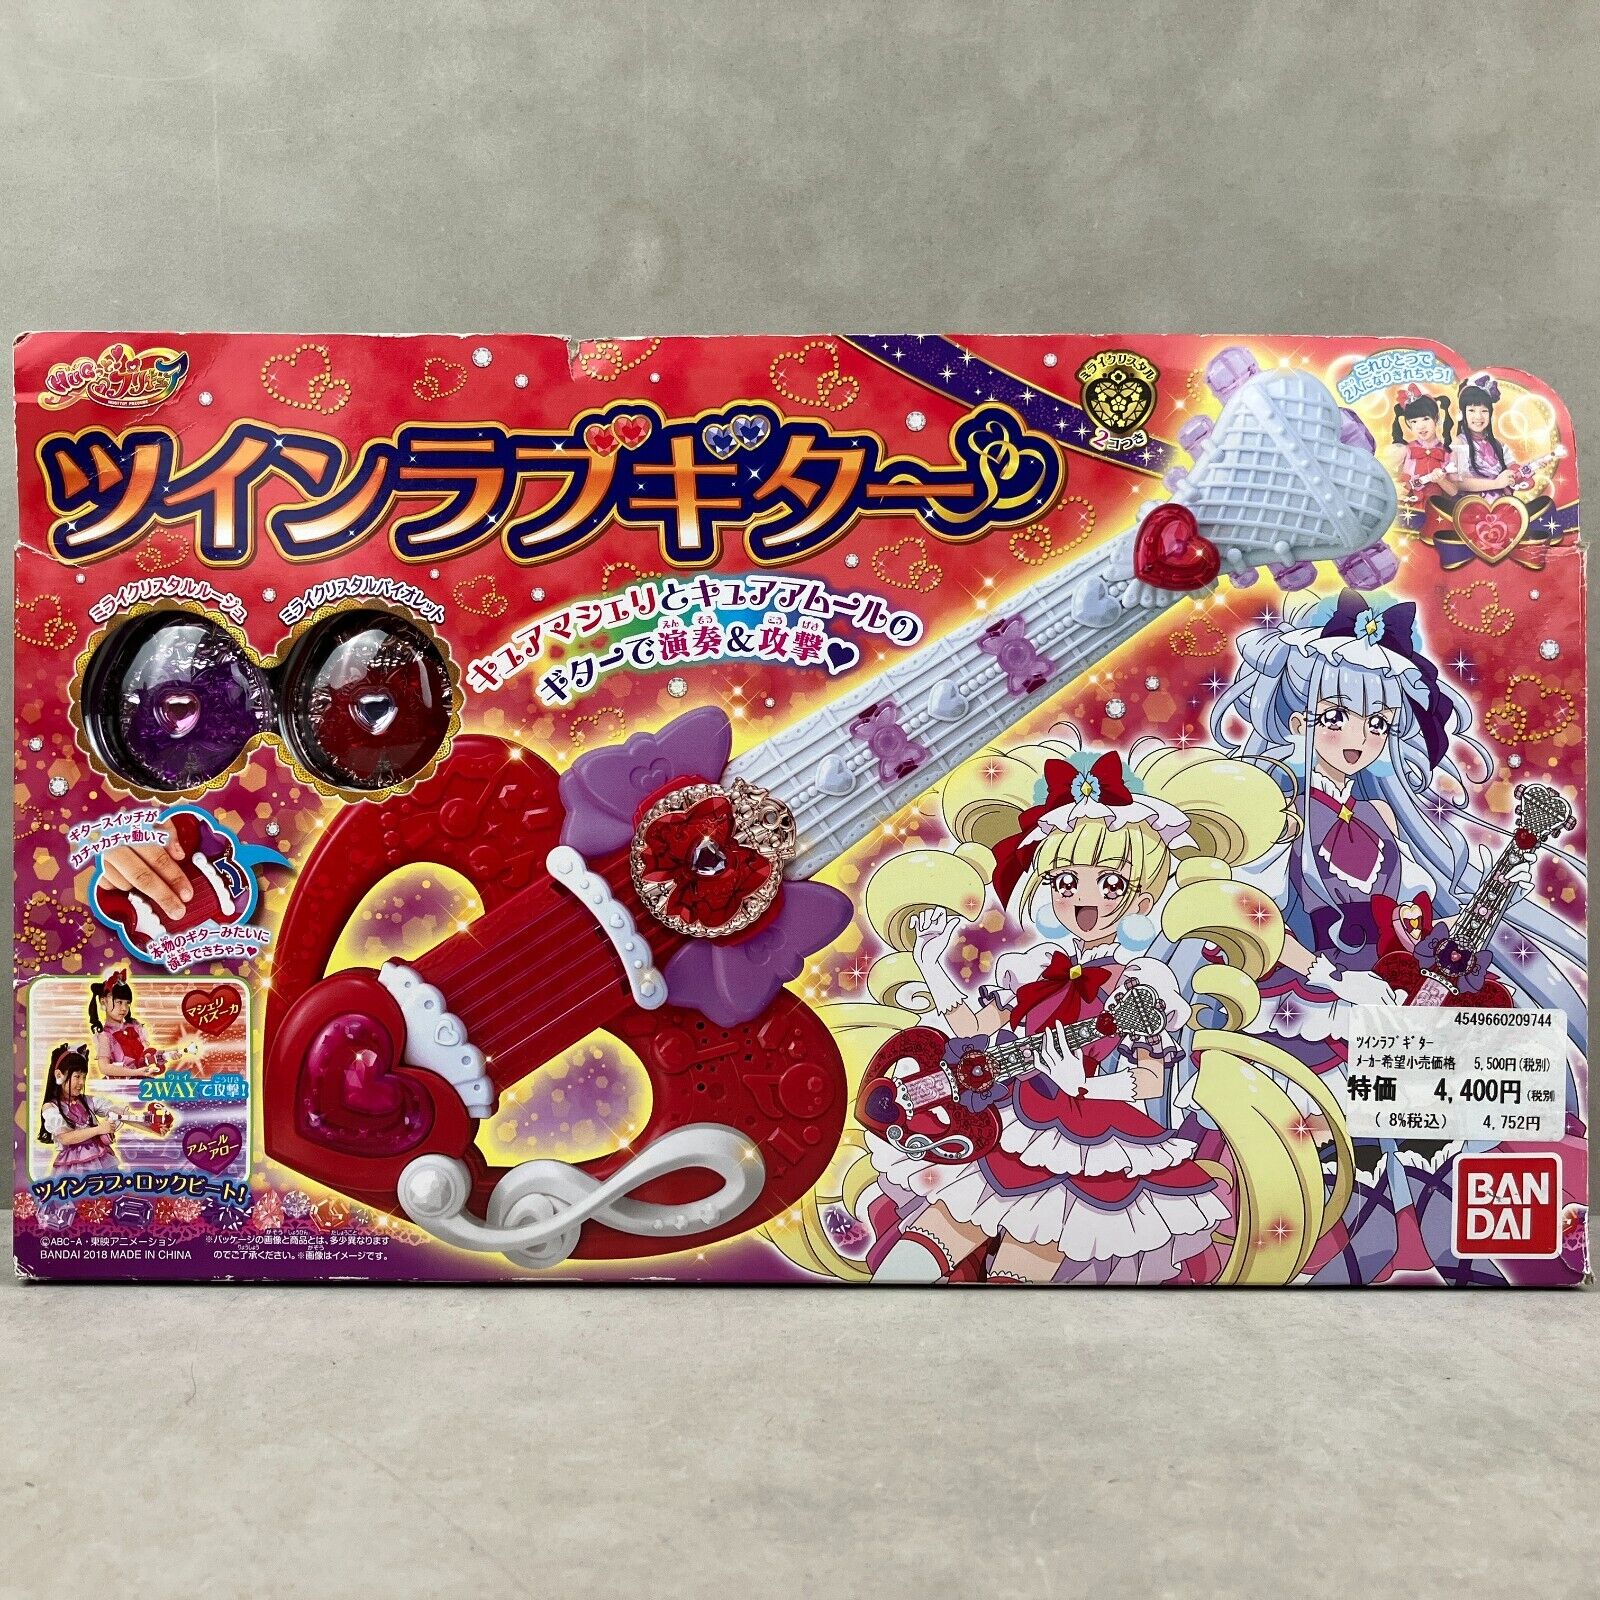 Bandai Hug Hugtto PreCure Twin Love Guitar Anime Model Wand NEW in Box